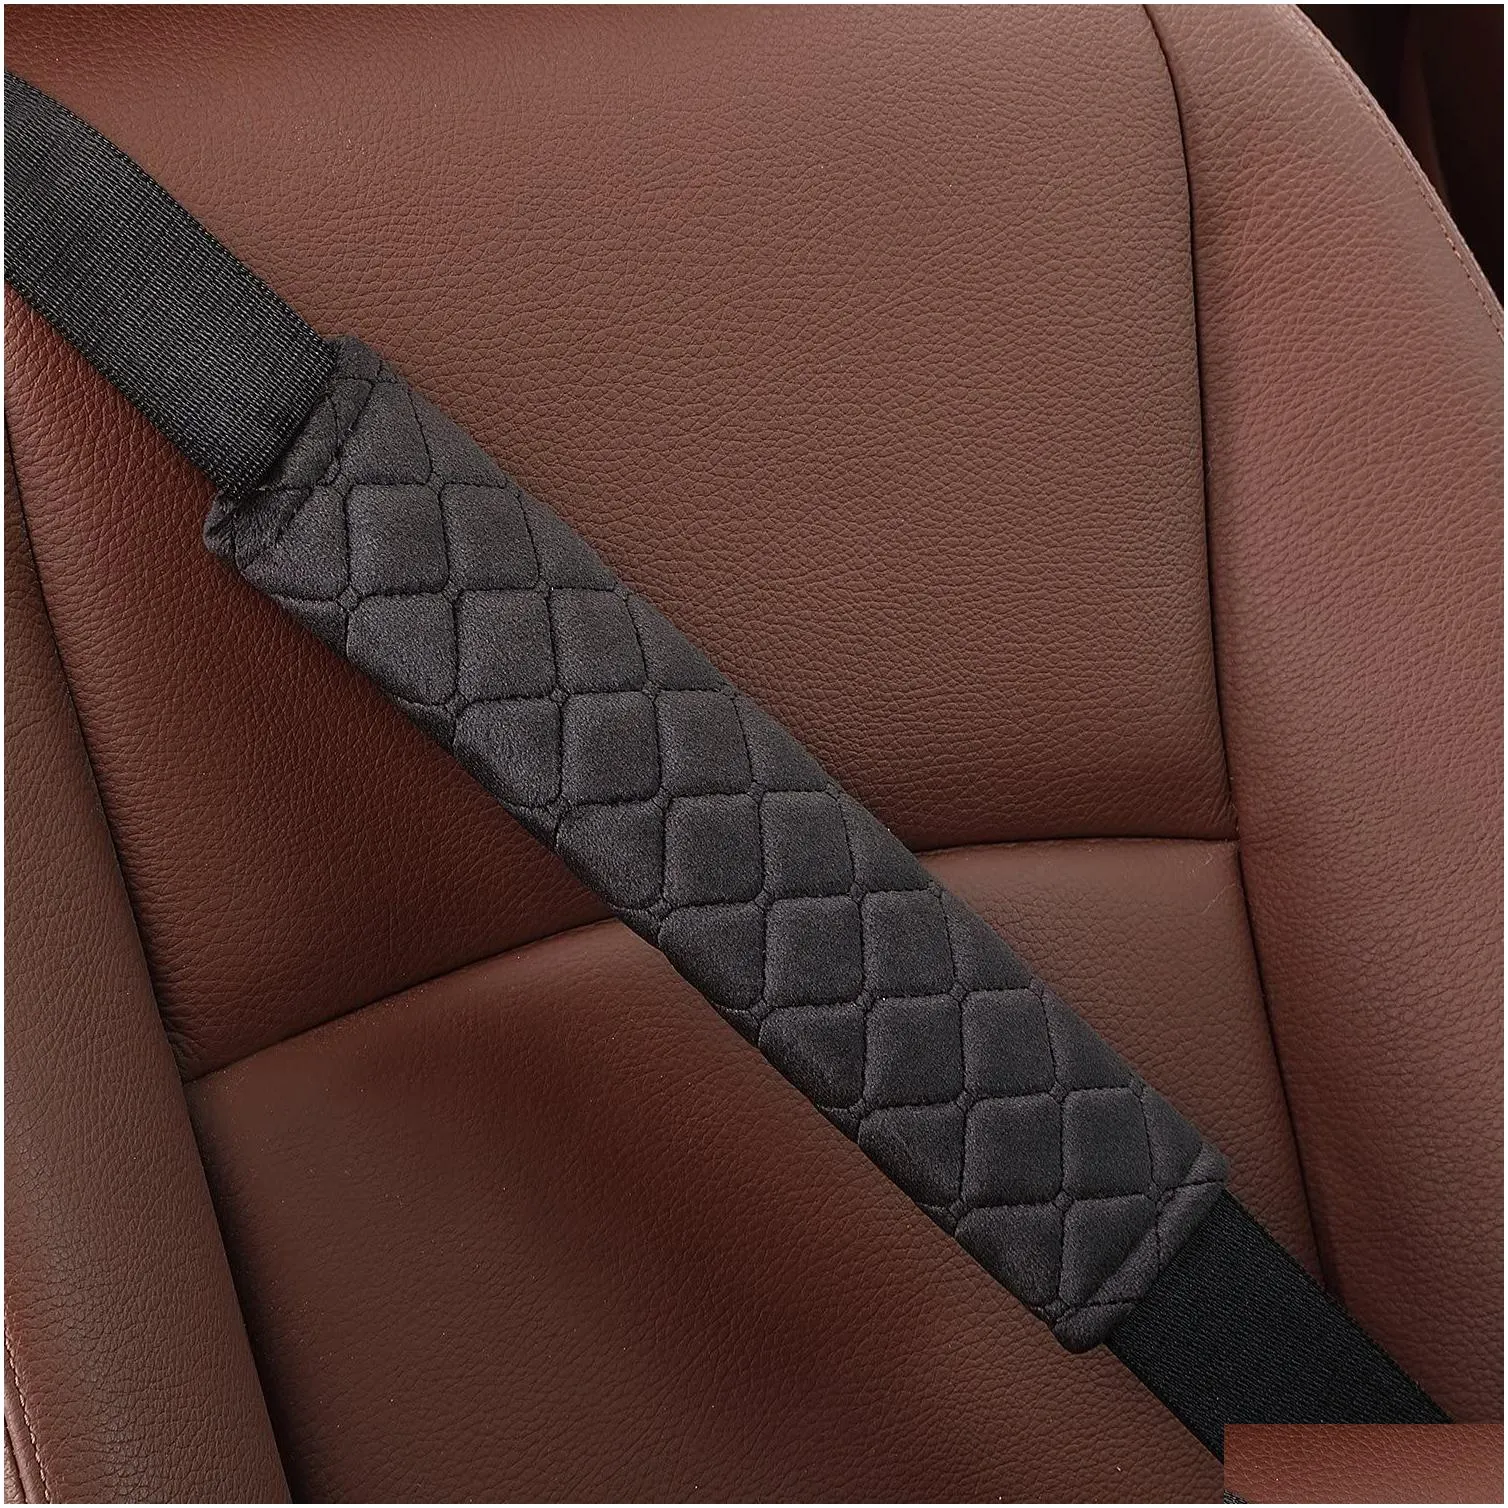 universal car seat belt pads cover seat belt shoulder strap covers harness pad soft comfort helps protect you neck shoulder